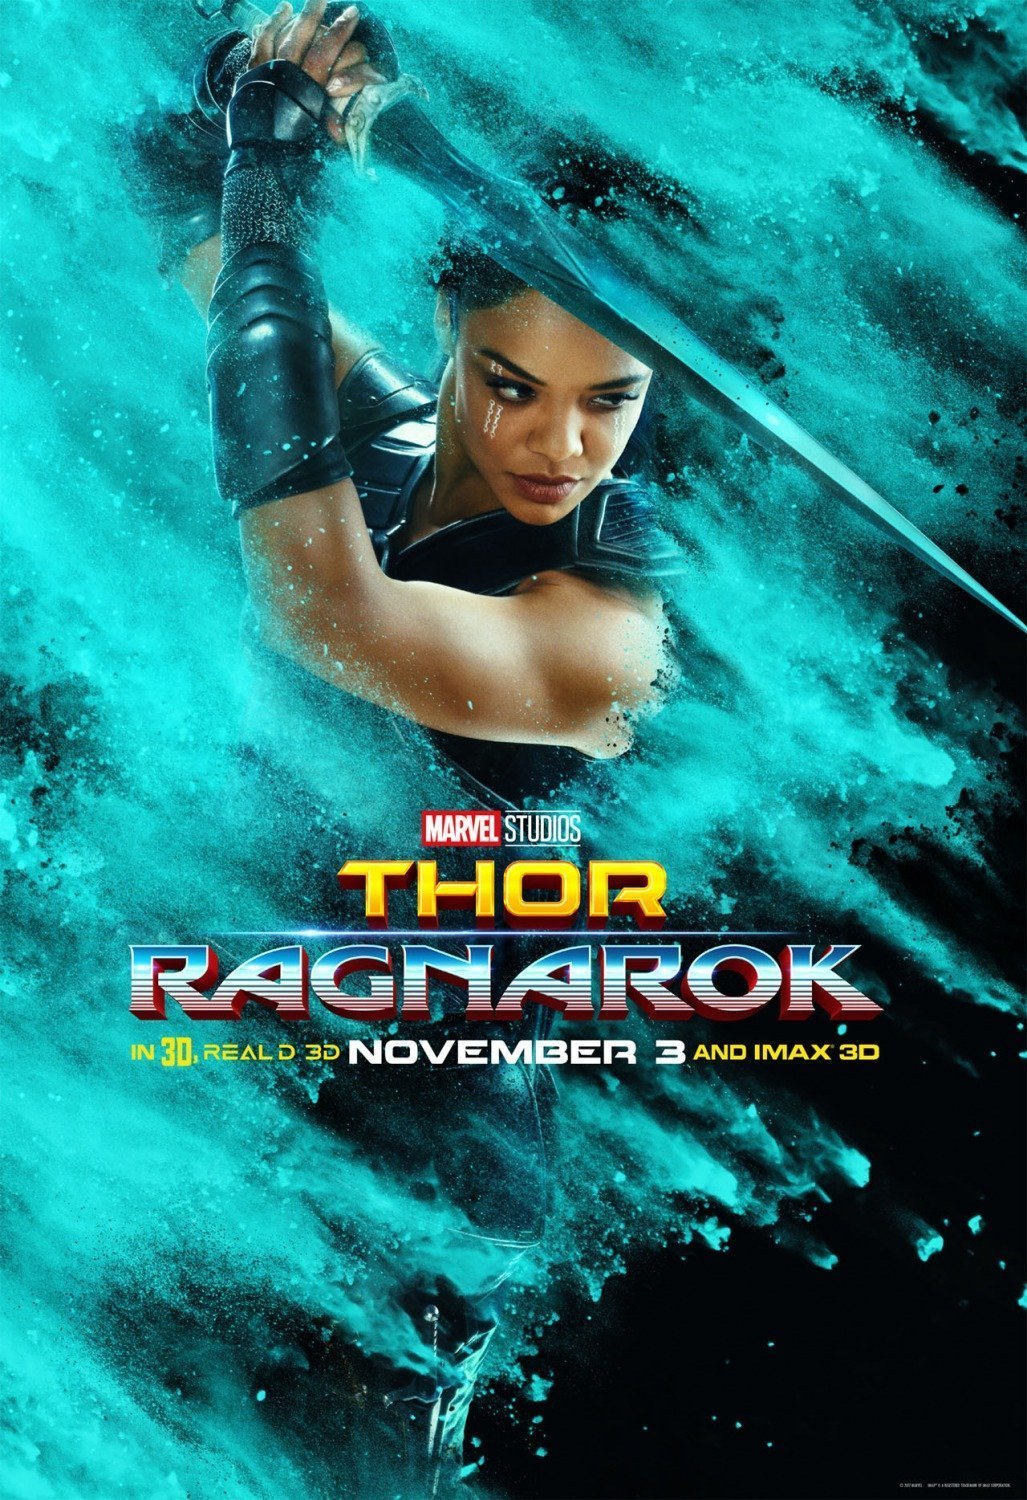 Poster du film Thor: Ragnarok avec Valkyrie